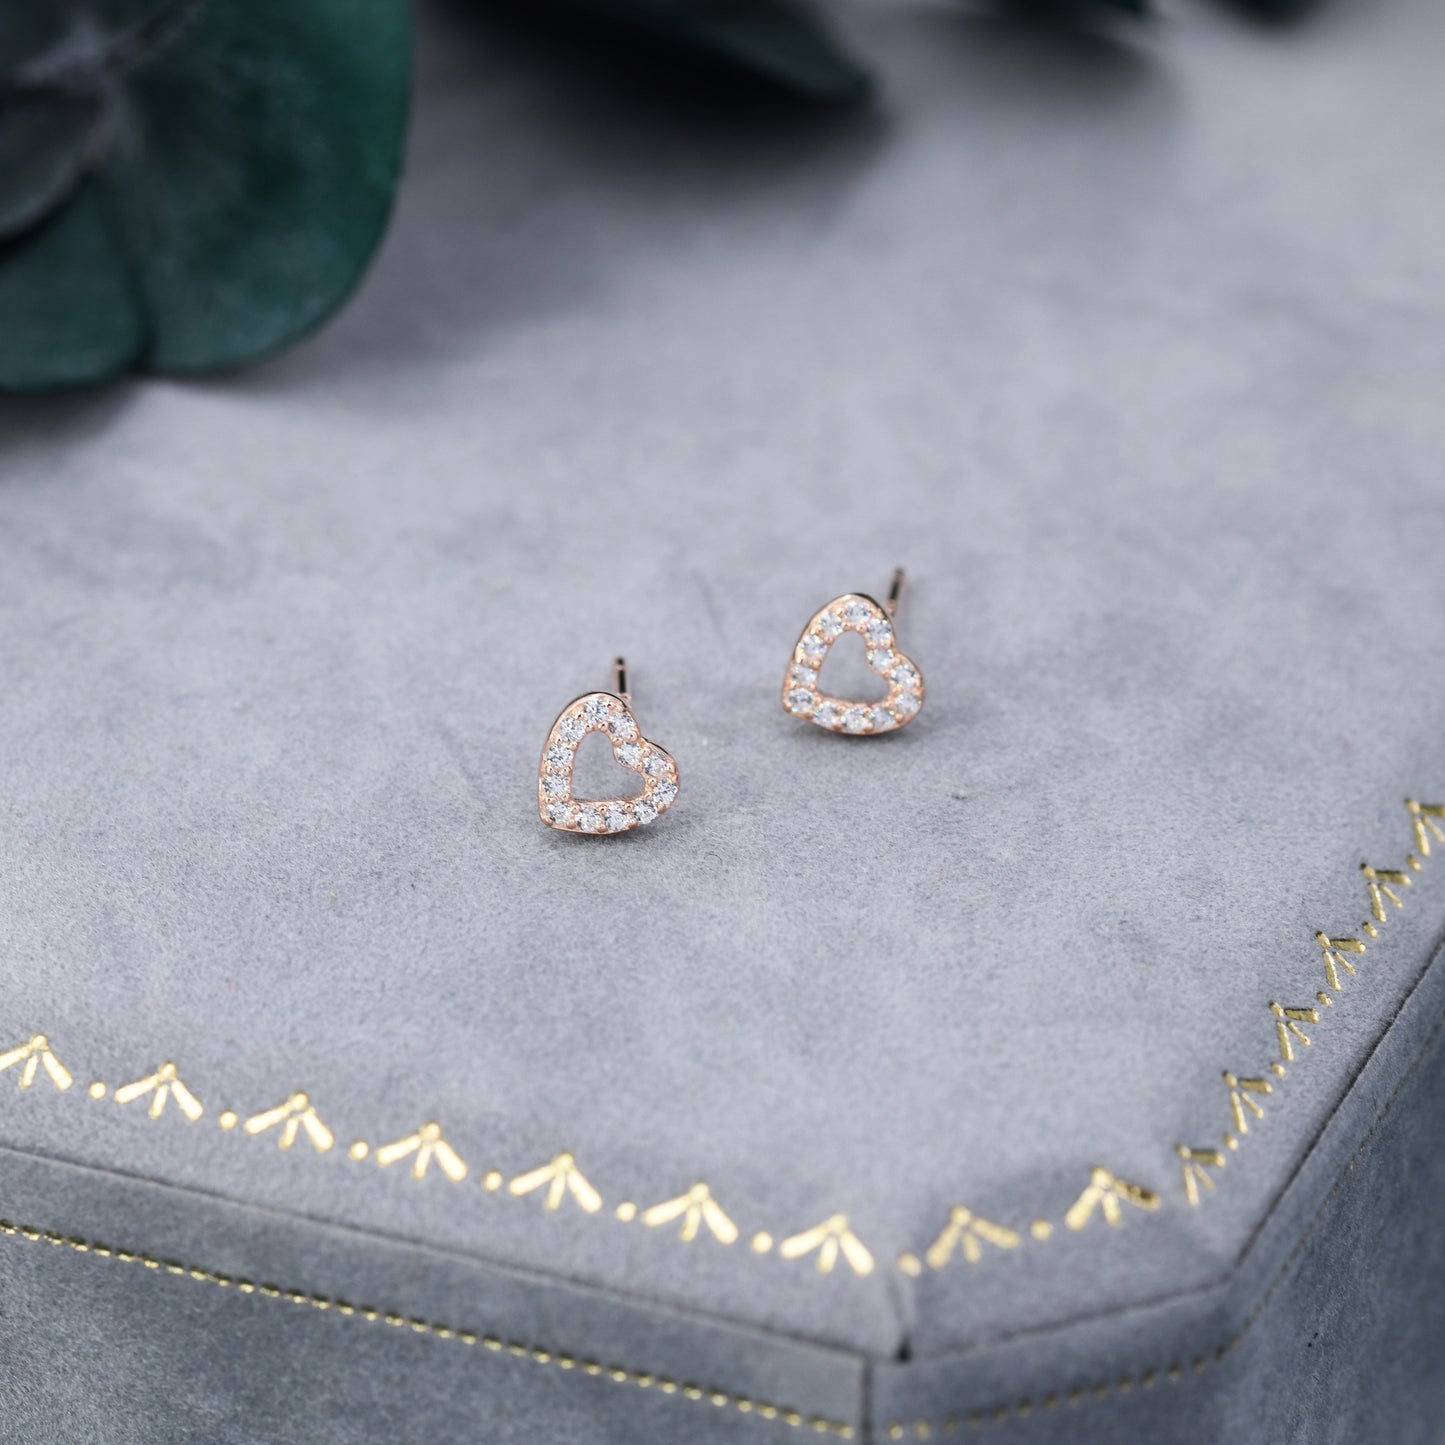 Tiny Open Heart Stud Earrings in Sterling Silver, Silver or Gold, CZ Heart Stud